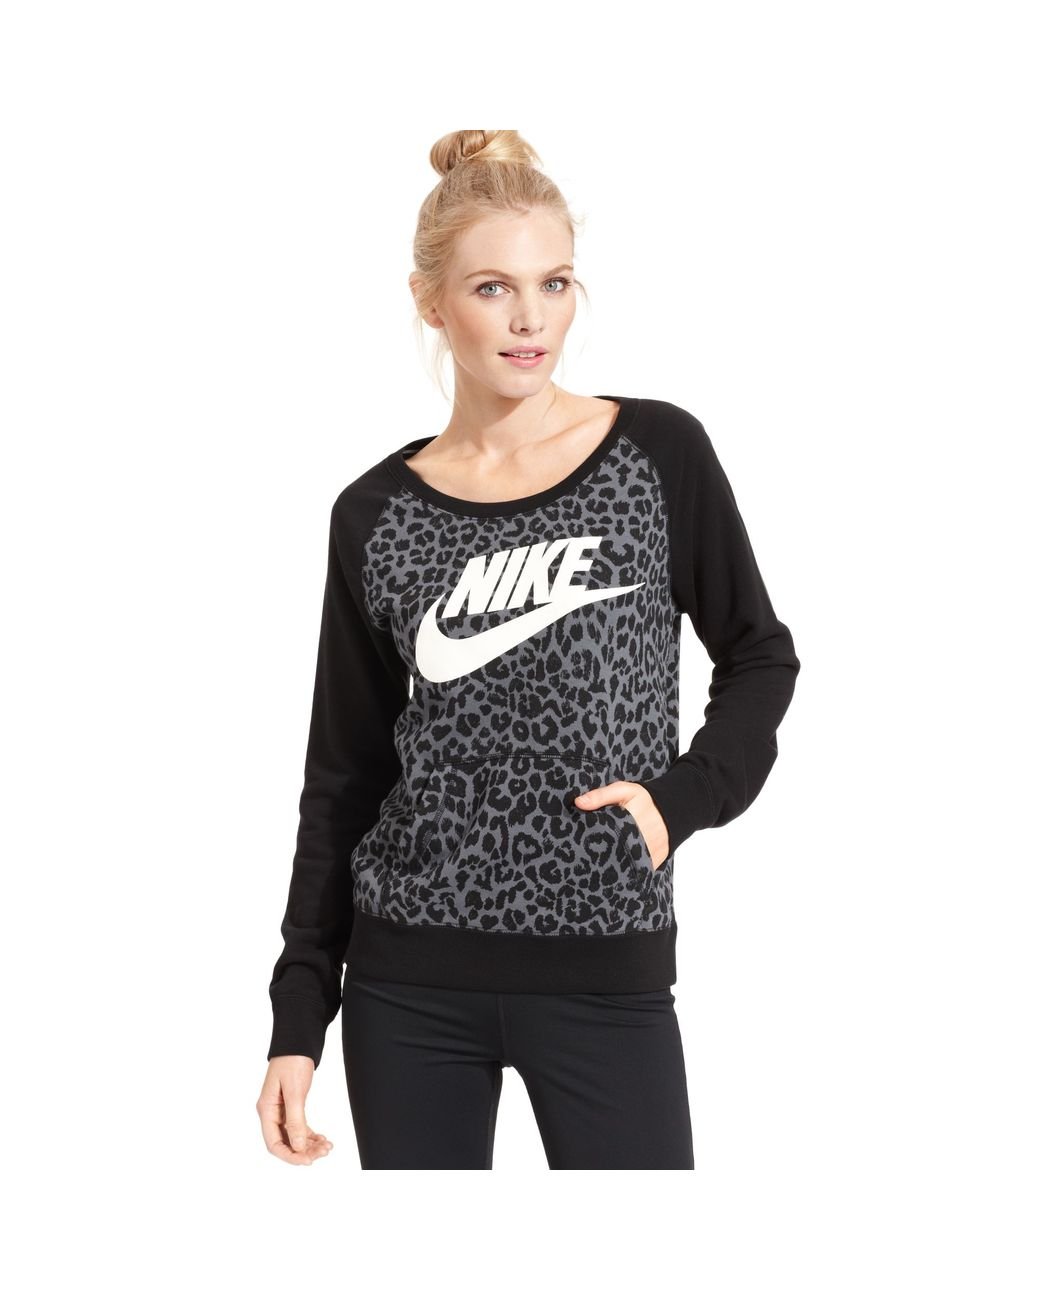 Nike Rally Cheetah Print Sweatshirt in 